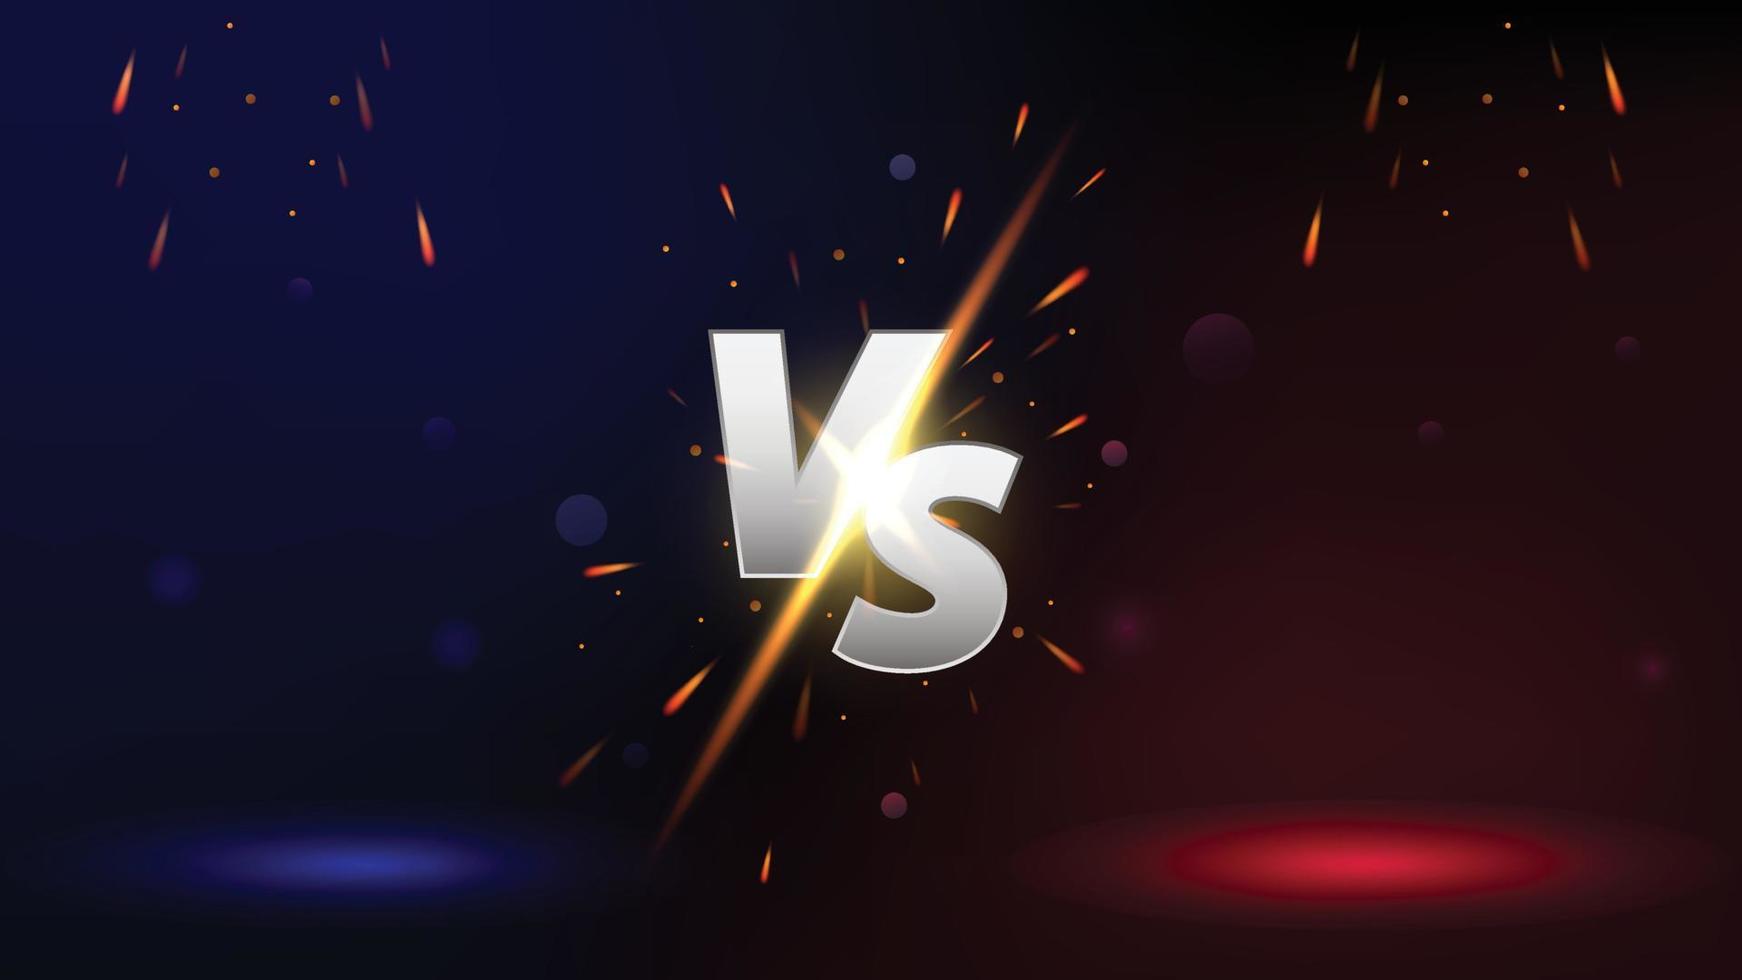 Versus Screen Design Banner. Competition vs Game Match, Martial Arts vs Sports Battle. Easy to Edit. Vector Illustration